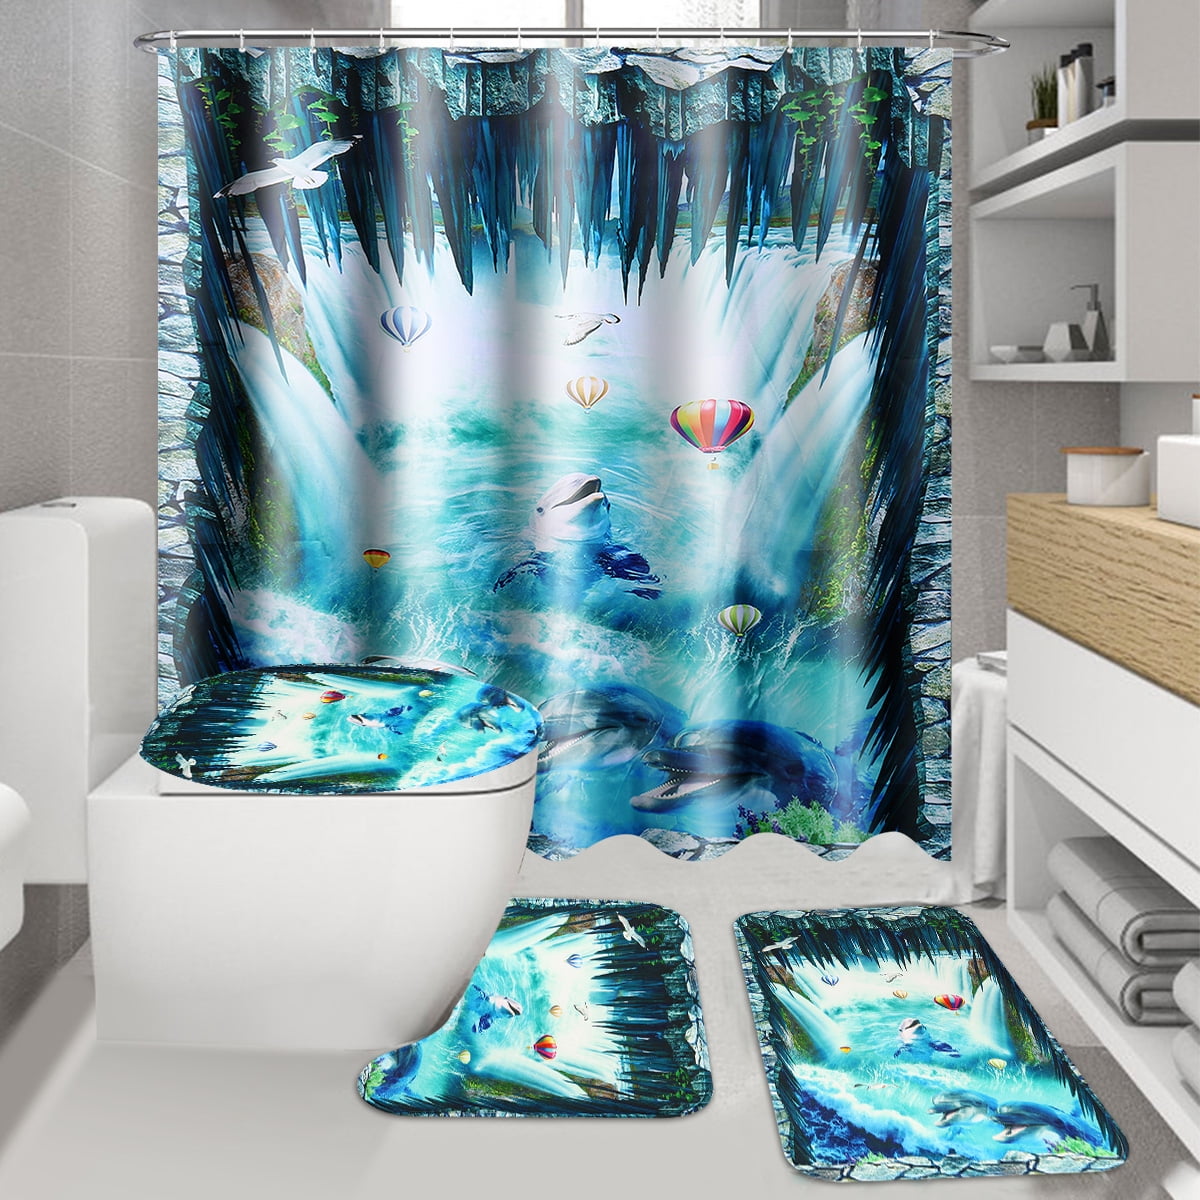 Green Cactus Wood Wall Shower Curtain Liner Bathroom Mat Waterproof Fabric Hooks 